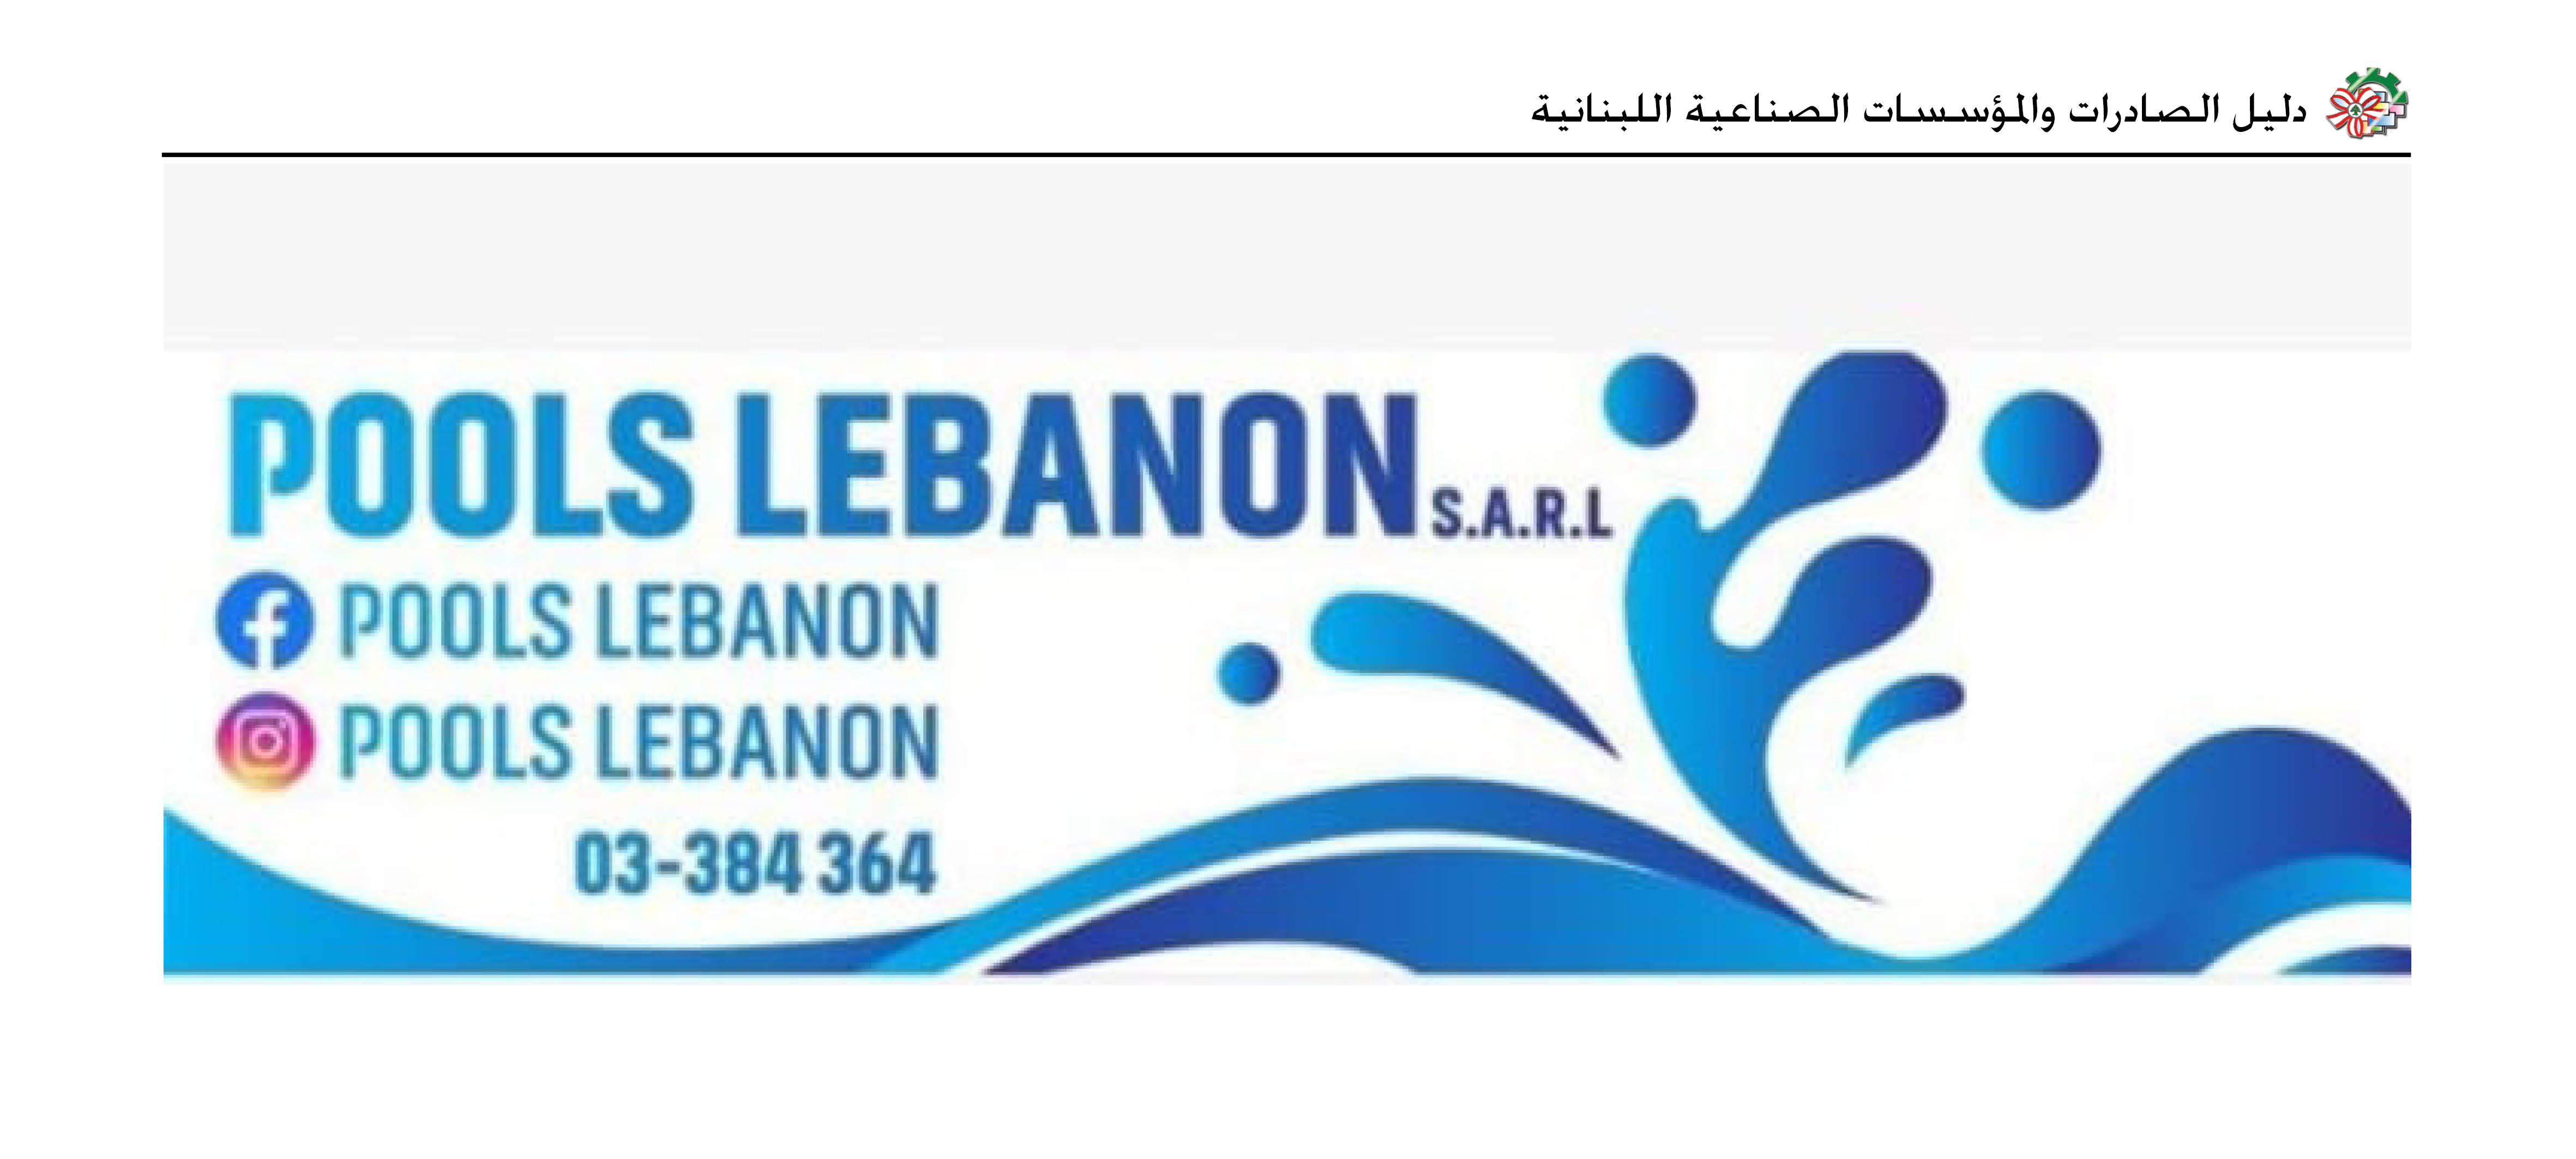 pools lebanon